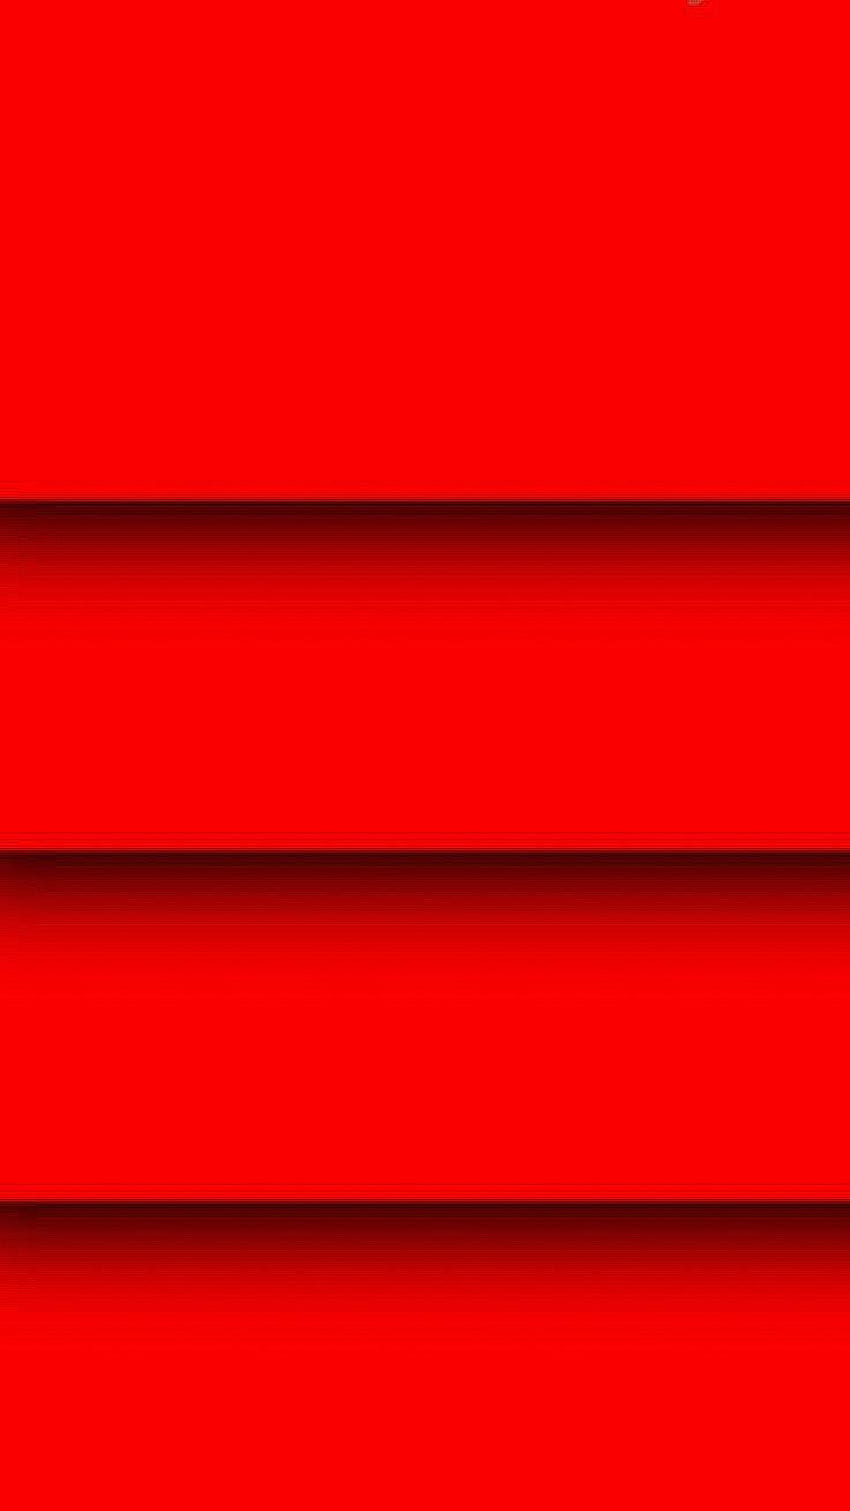 Vermelho/red, red aesthetic HD phone wallpaper